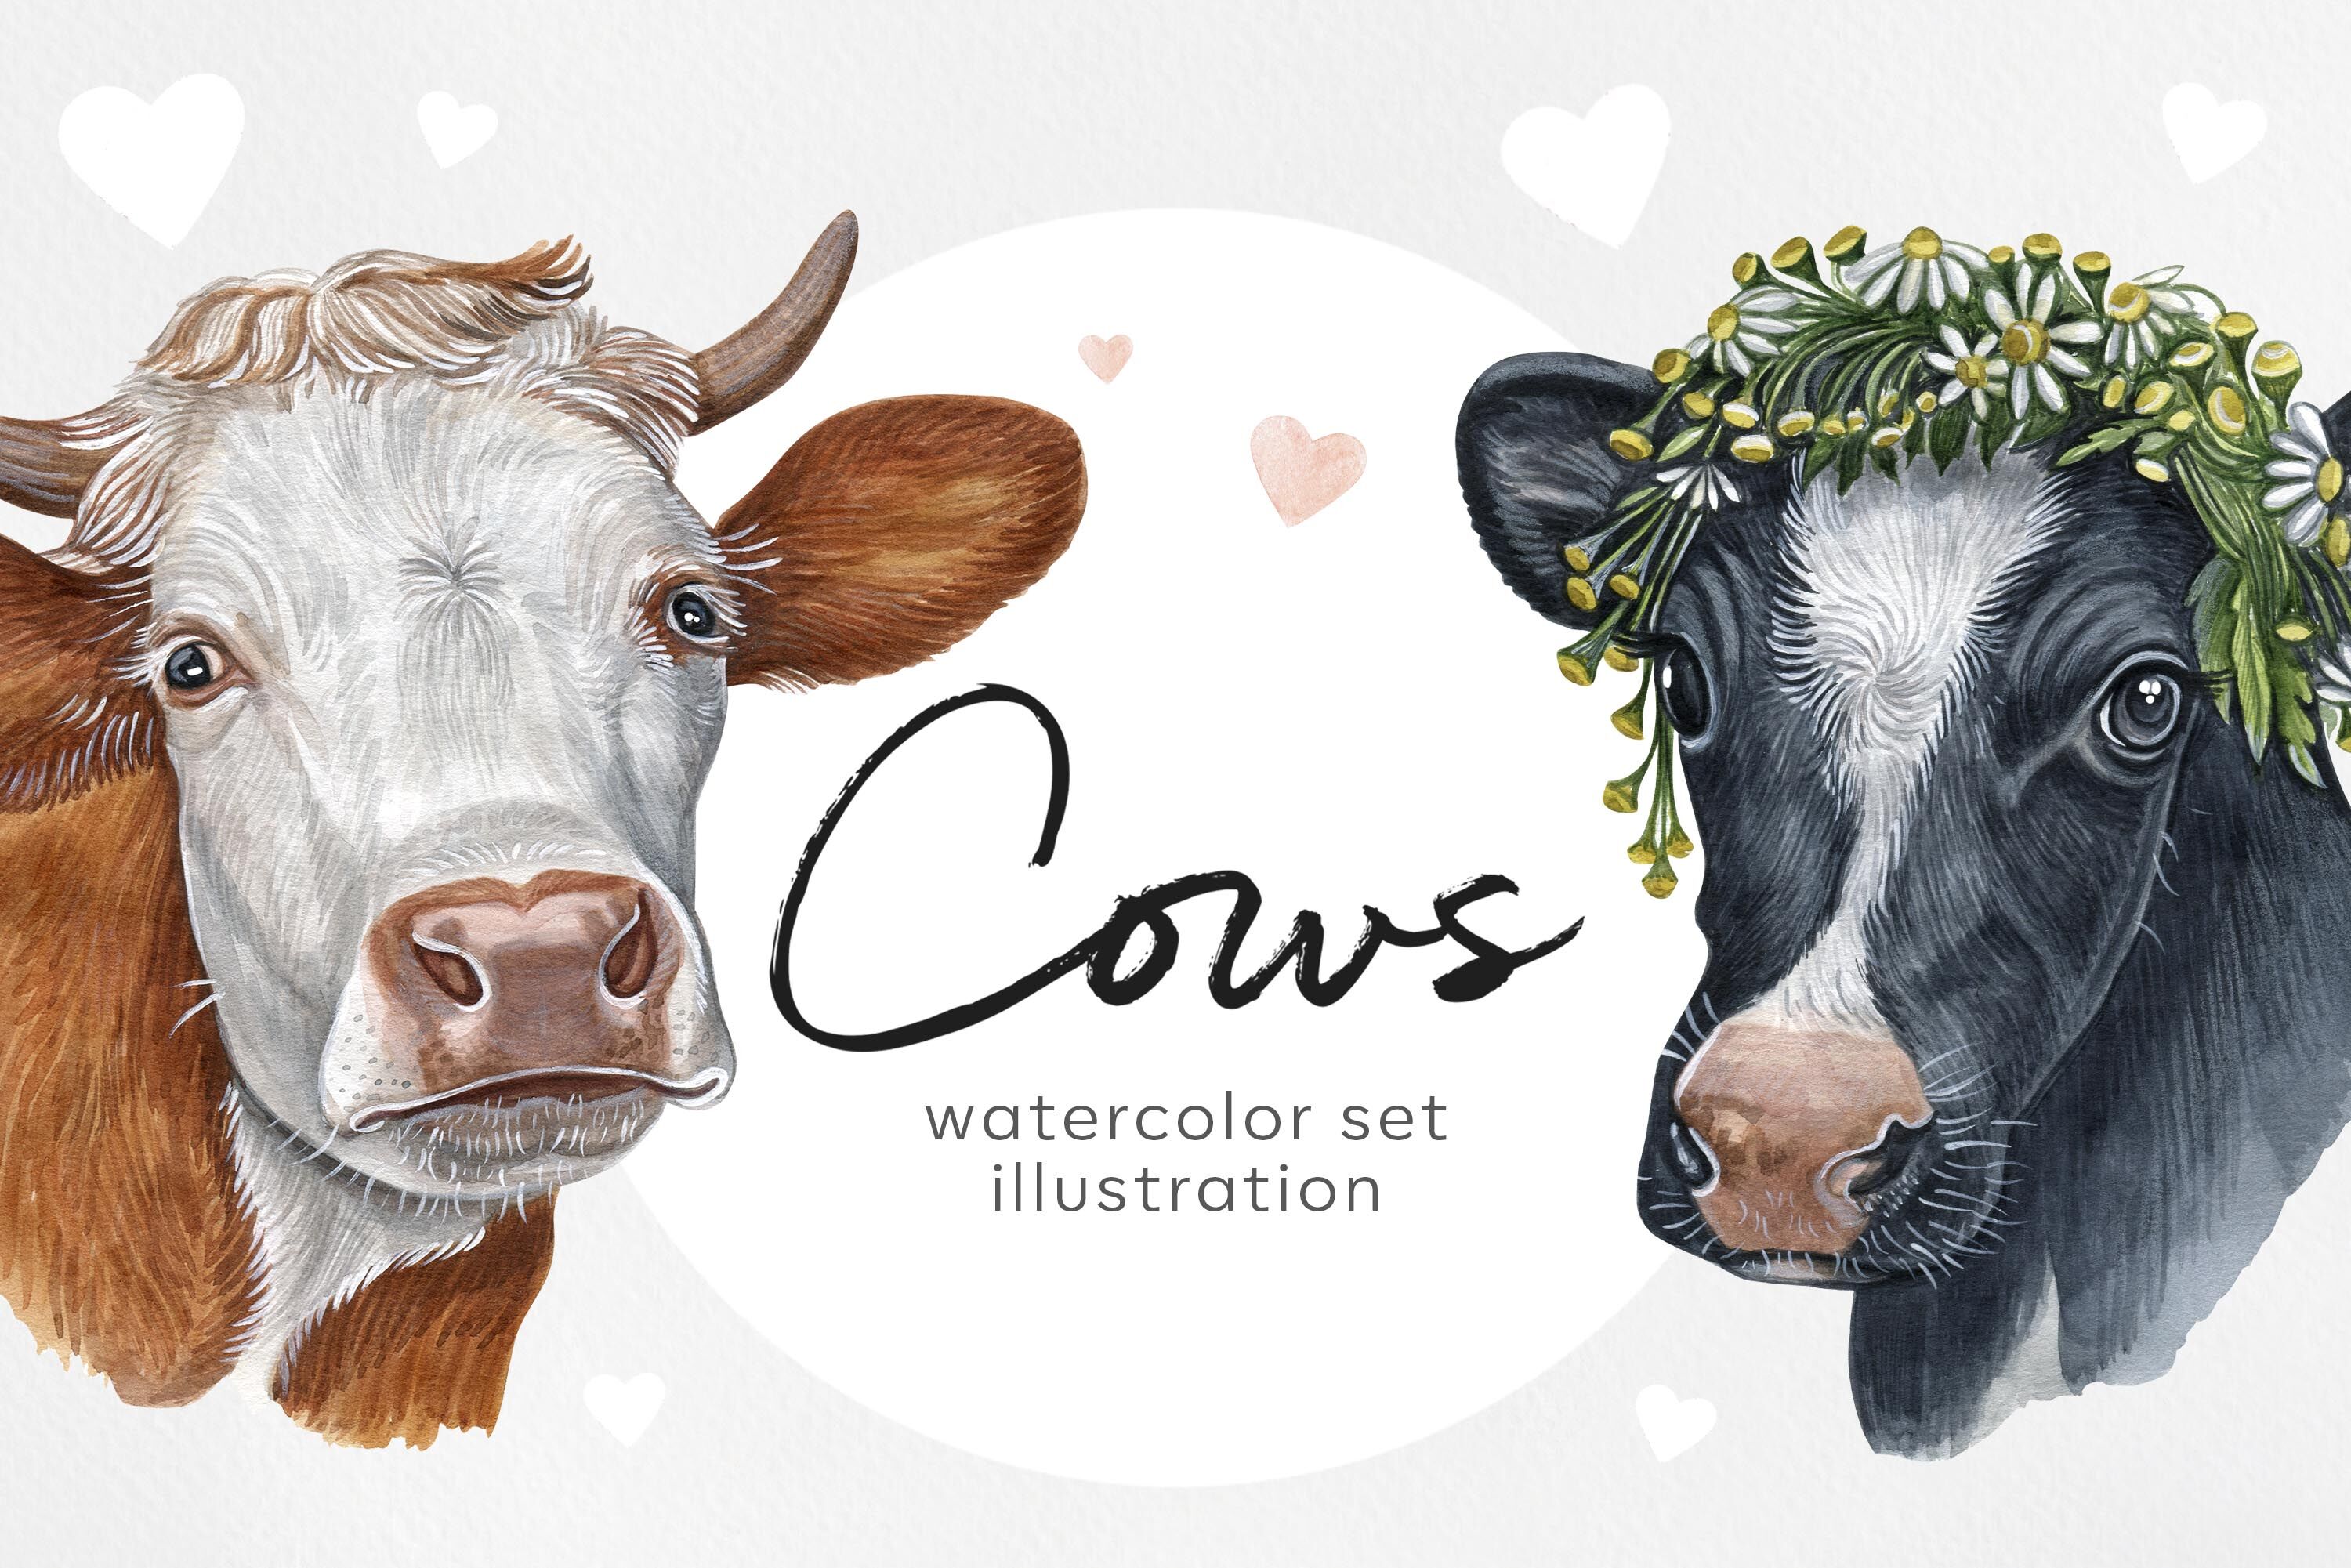 ori_3825271_wwmk1d1ya861v4wapcaccxjrex2sp8ylozm3zkmv_watercolor-set-cute-cow-and-ox-illustrations-8-cows.jpg